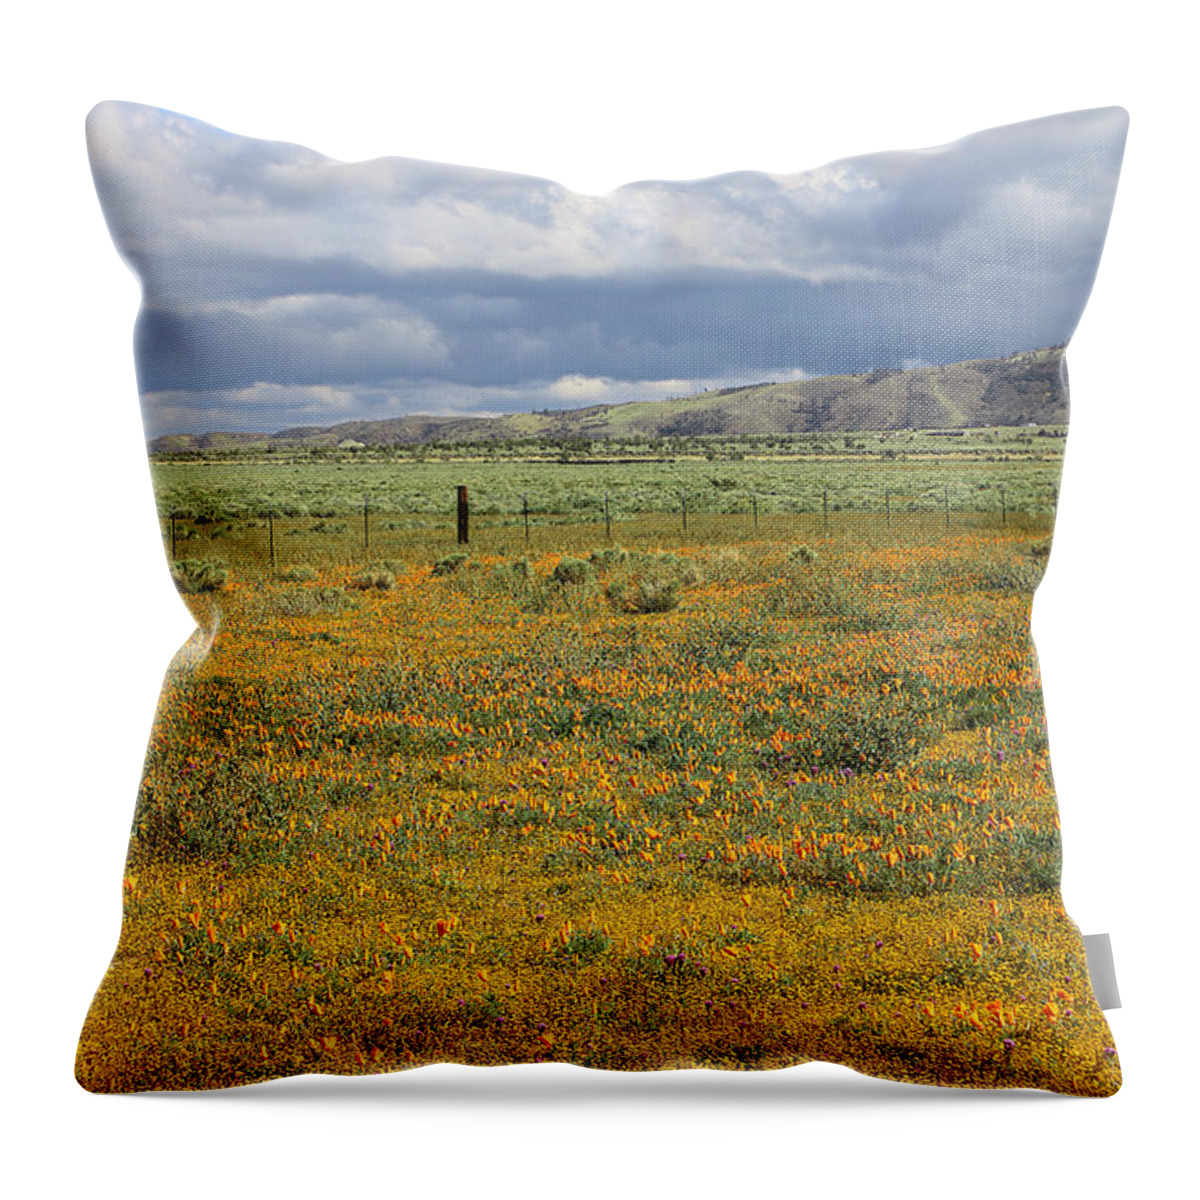 Poppies Field In Antelope Valley Throw Pillow featuring the photograph Poppies Field In Antelope Valley by Viktor Savchenko